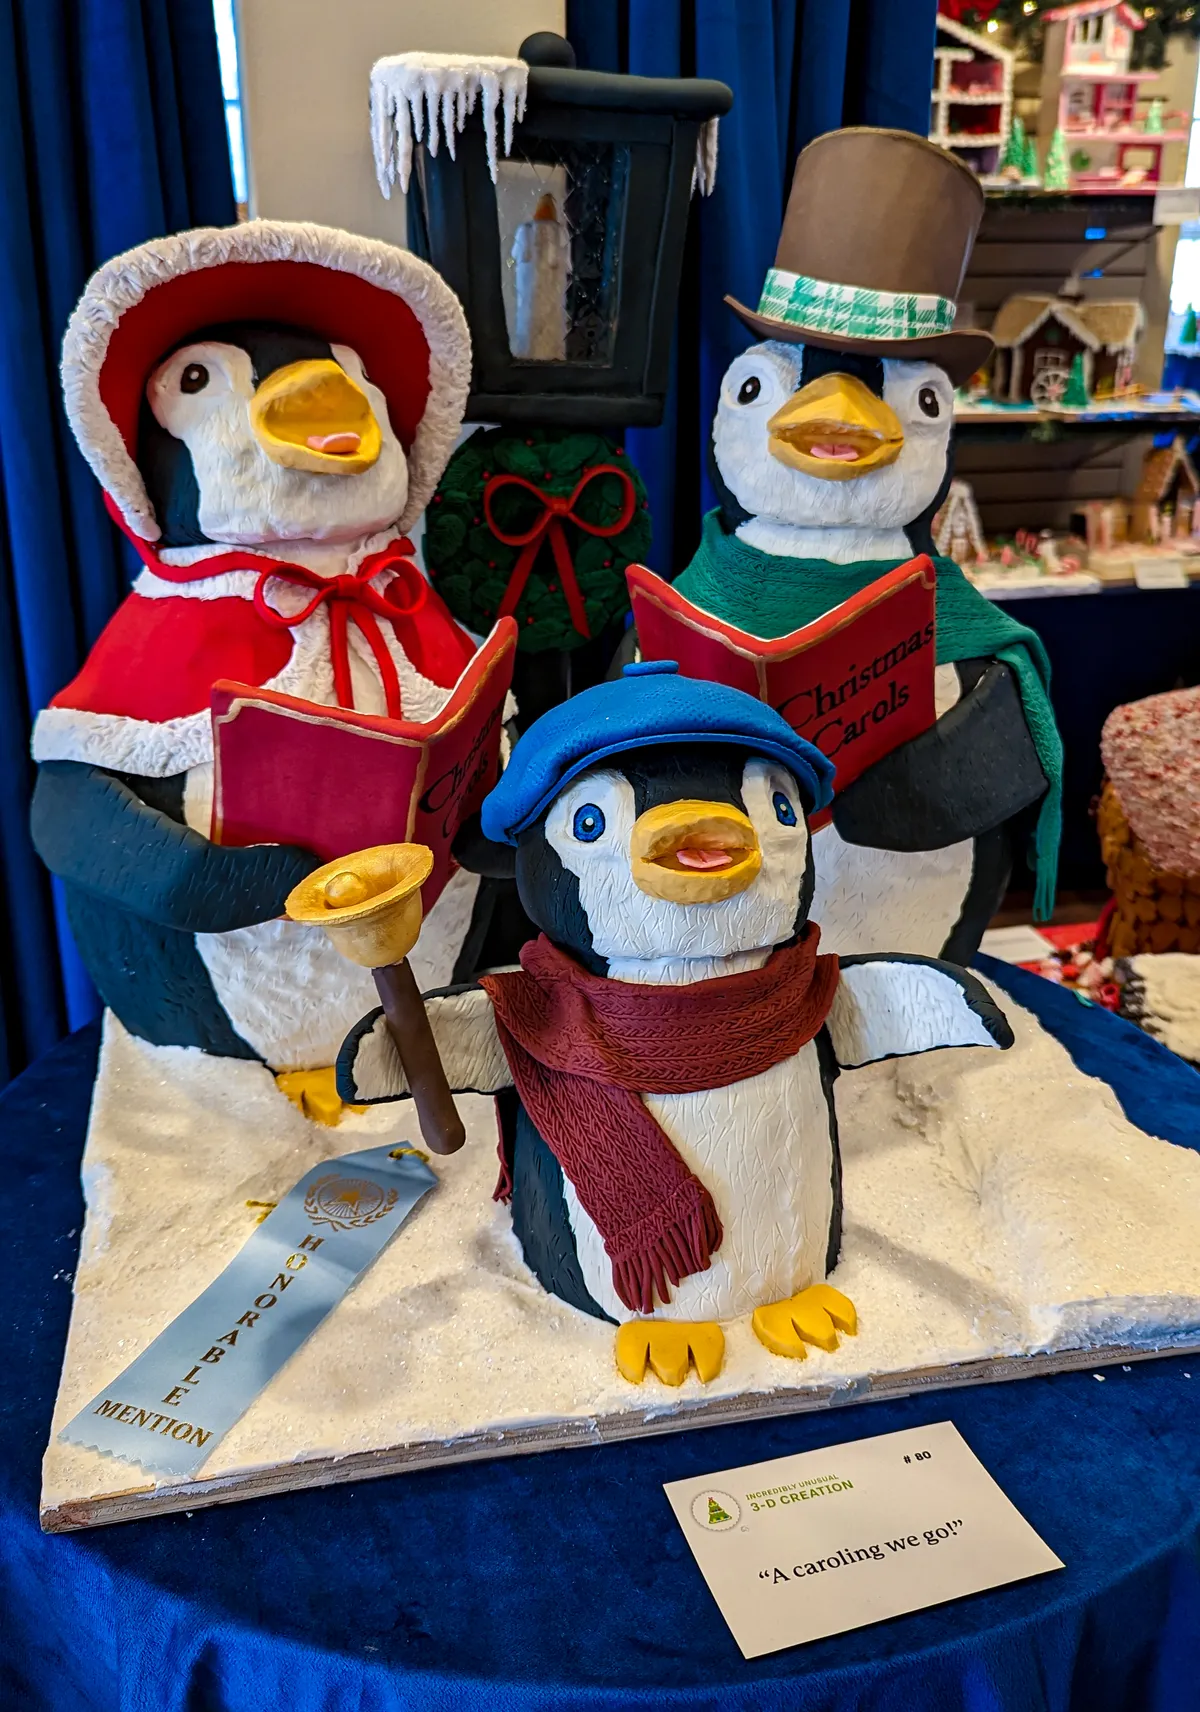 3 anthropomorphic ginger bread penguins are singing Christmas carols. 